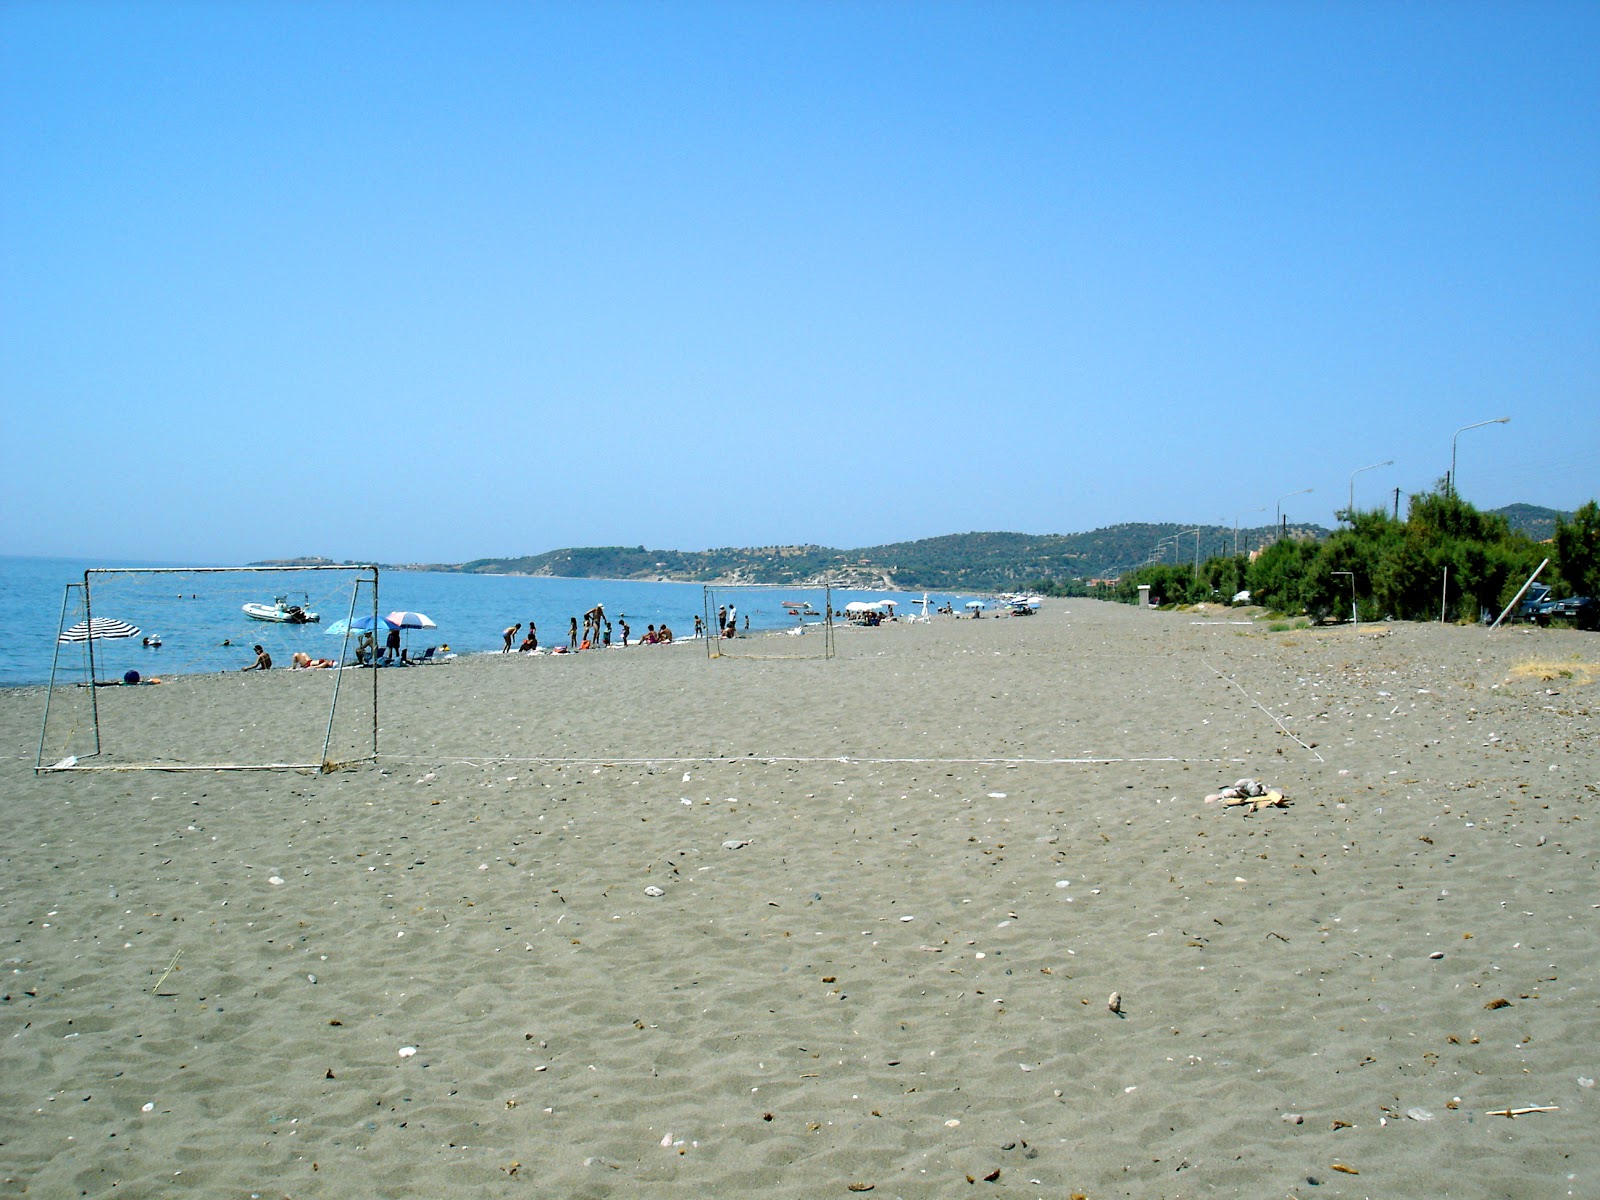 Fotografie cu Vatera beach II - locul popular printre cunoscătorii de relaxare